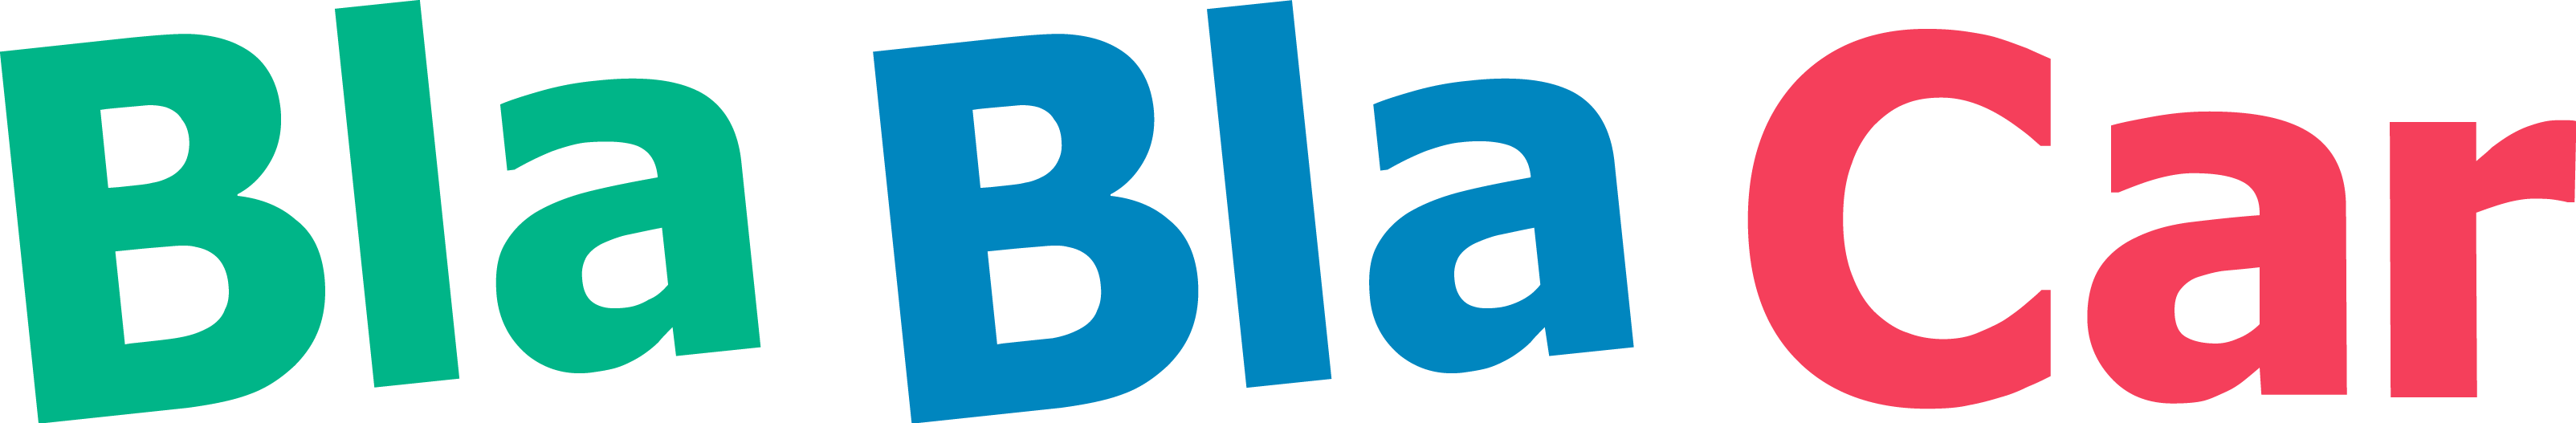 BlaBlaCar Logo - BlaBlaCar Competitors, Revenue and Employees Company Profile